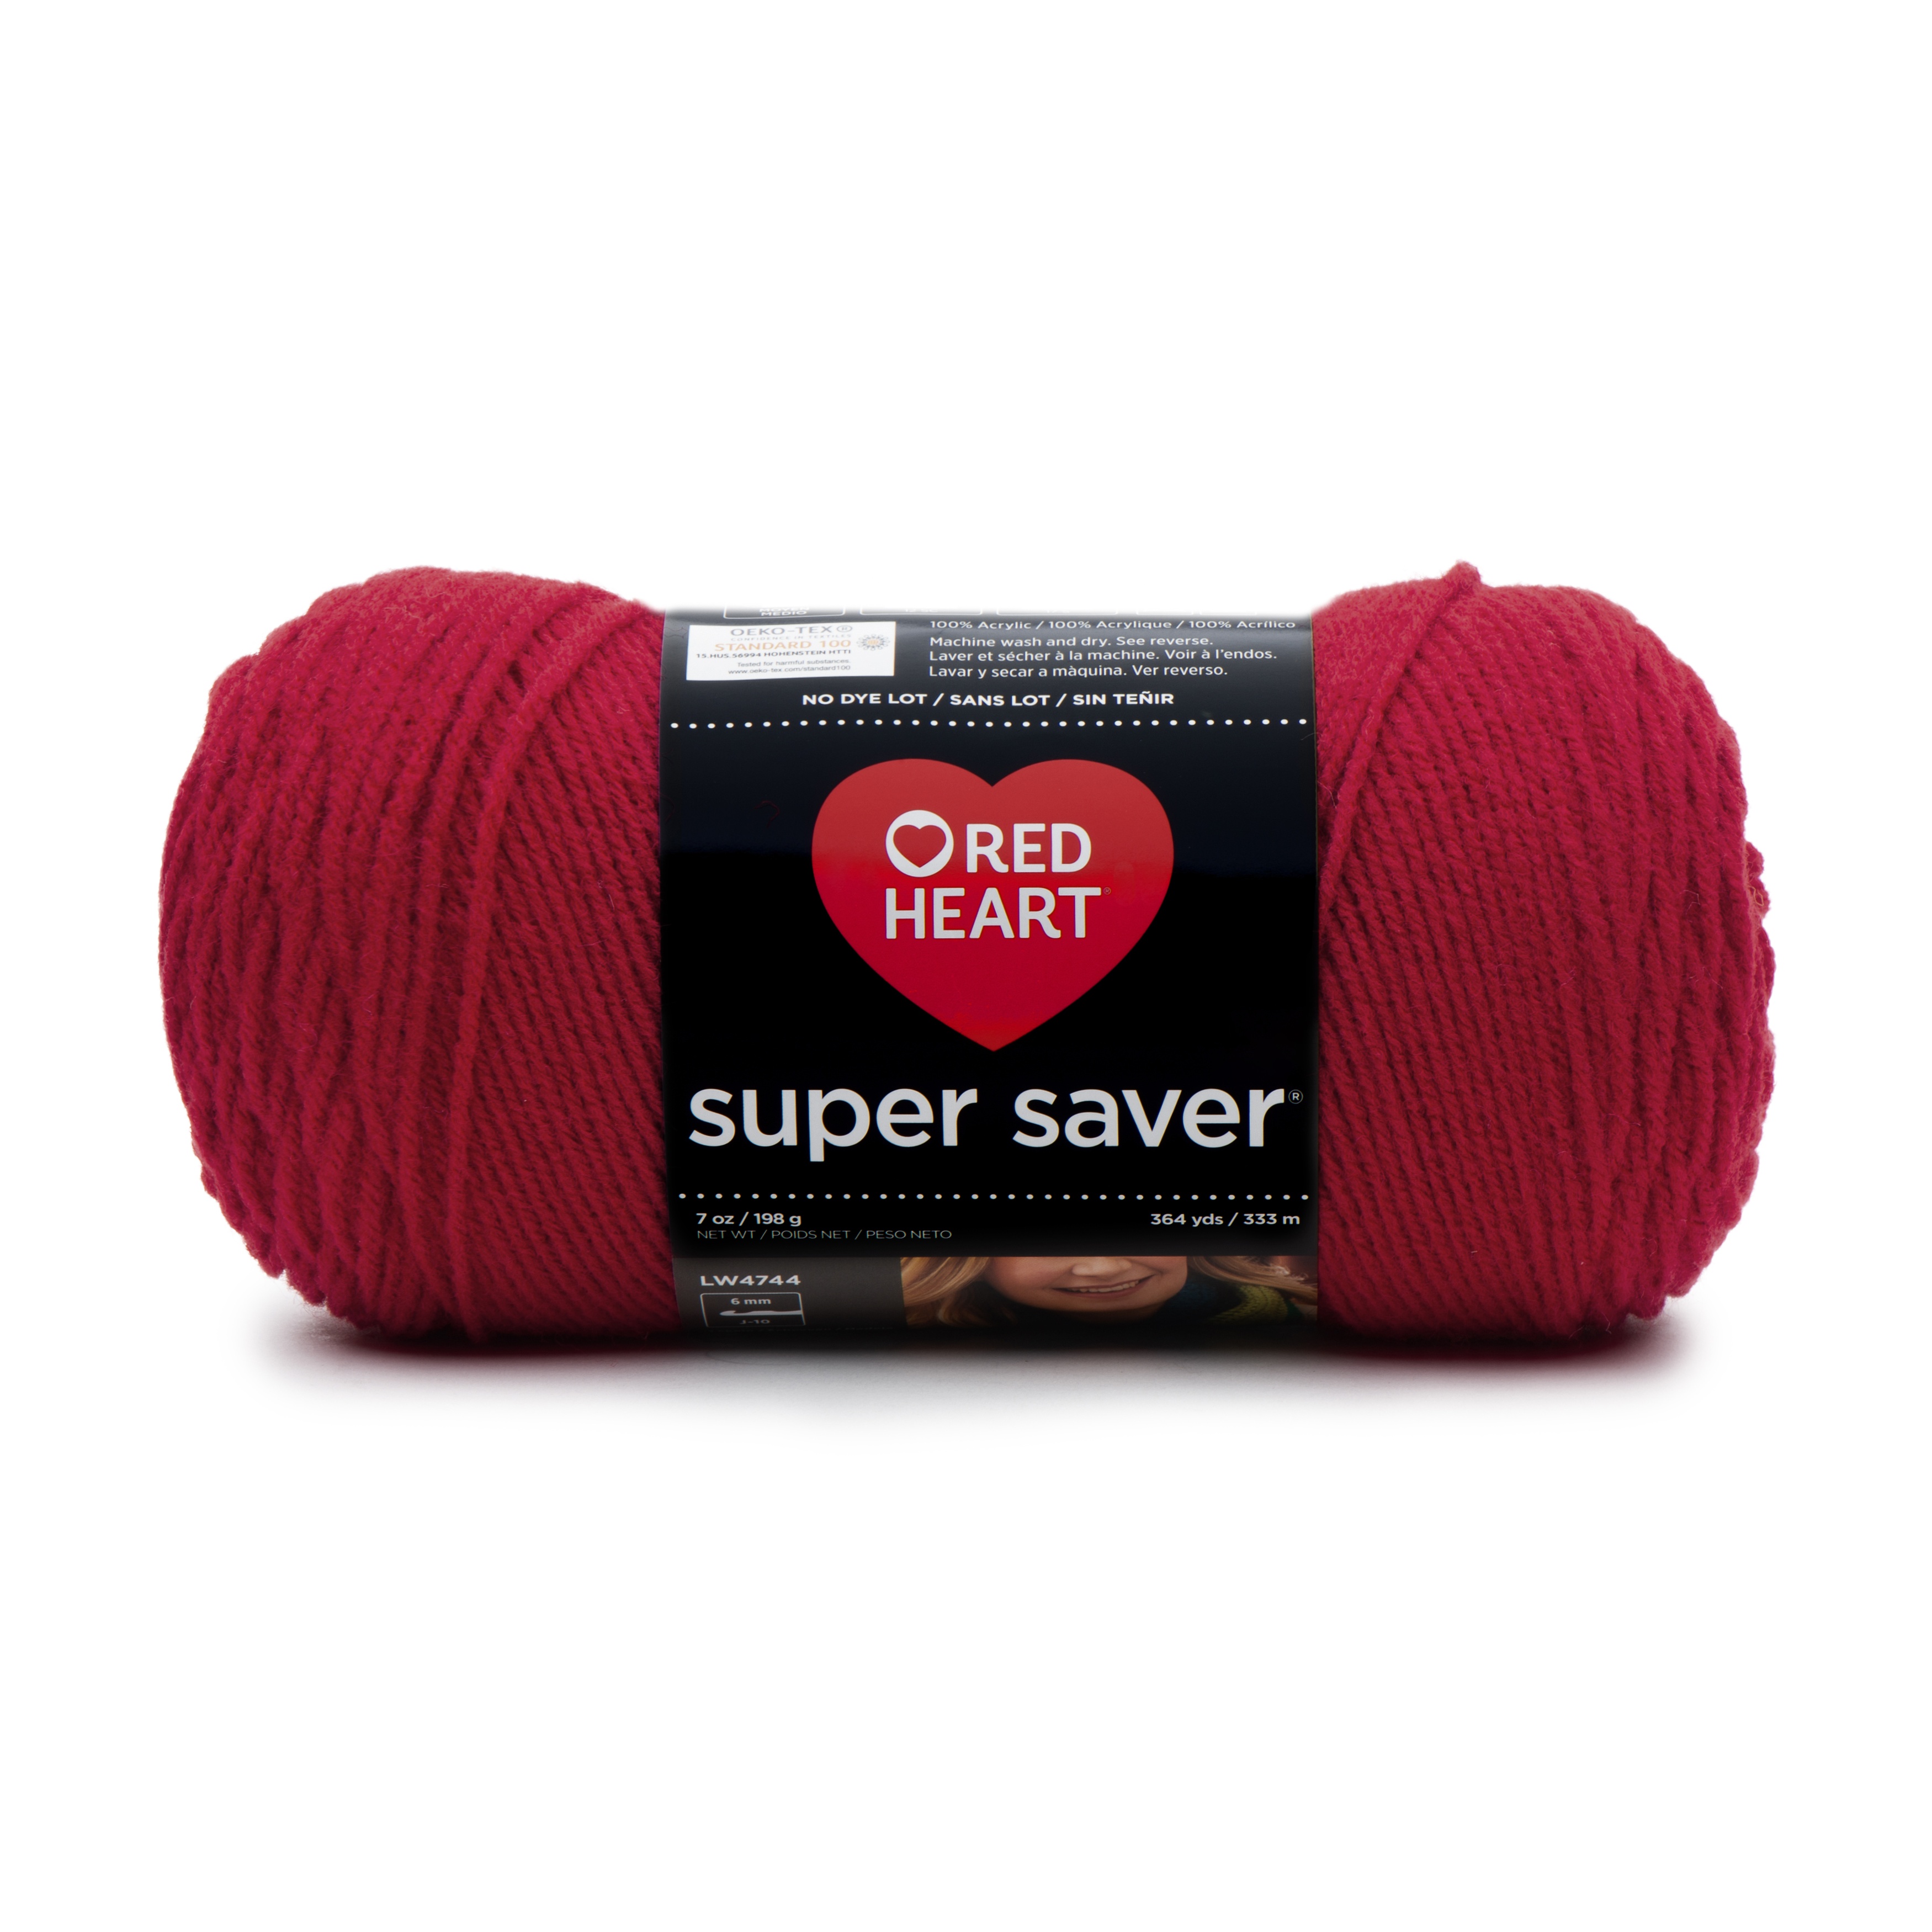 Red Heart Super Saver Yarn, Medium Acrylic Cherry Red Yarn, 364 yd - image 1 of 4